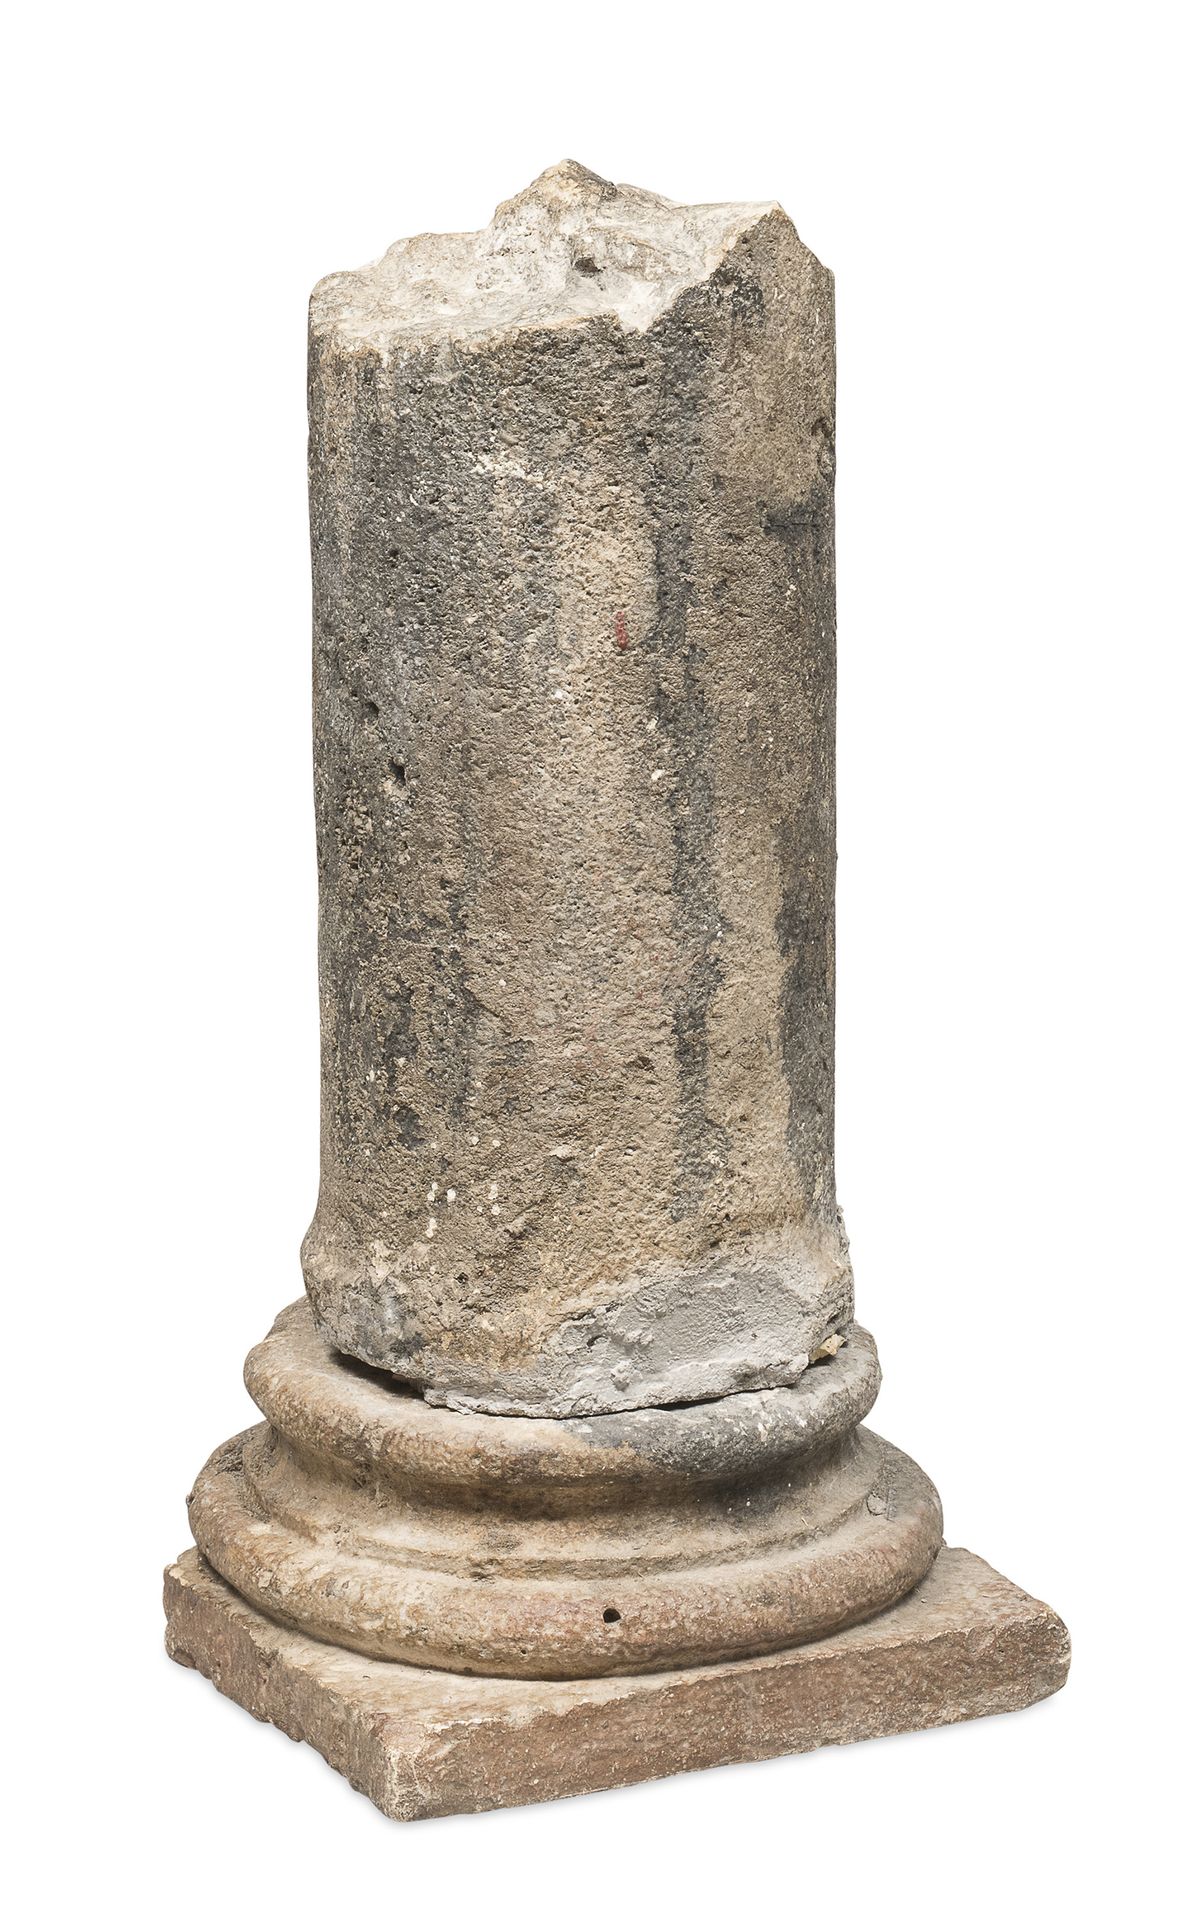 Null 柱子碎片，十六世纪

在两个非洲大理石元素和白色大理石底座中，有一个成型的边缘。

尺寸为55 x 27 x 27厘米。

柱子的下半部分用水泥修复。&hellip;